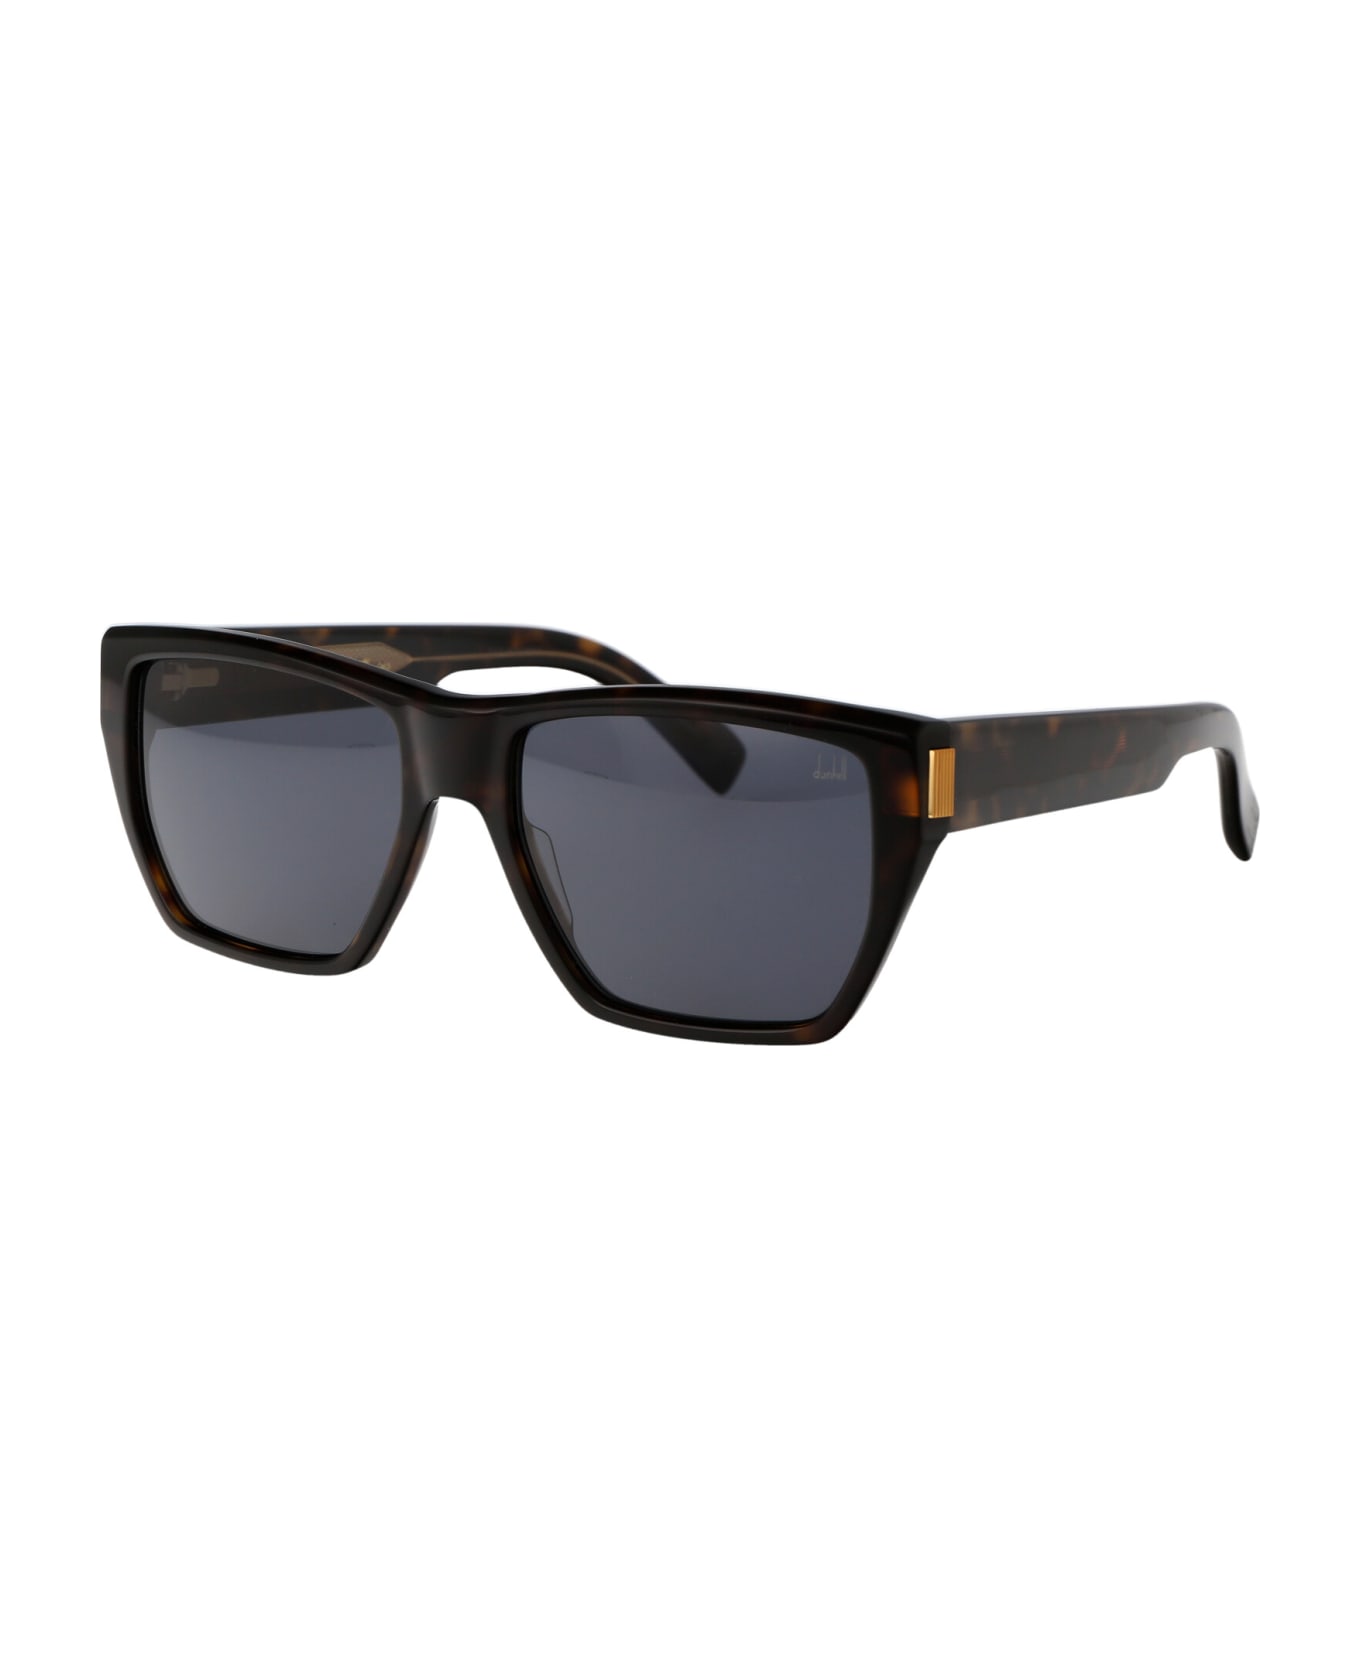 Dunhill Du0031s Sunglasses - 004 GREY GREY GREY サングラス